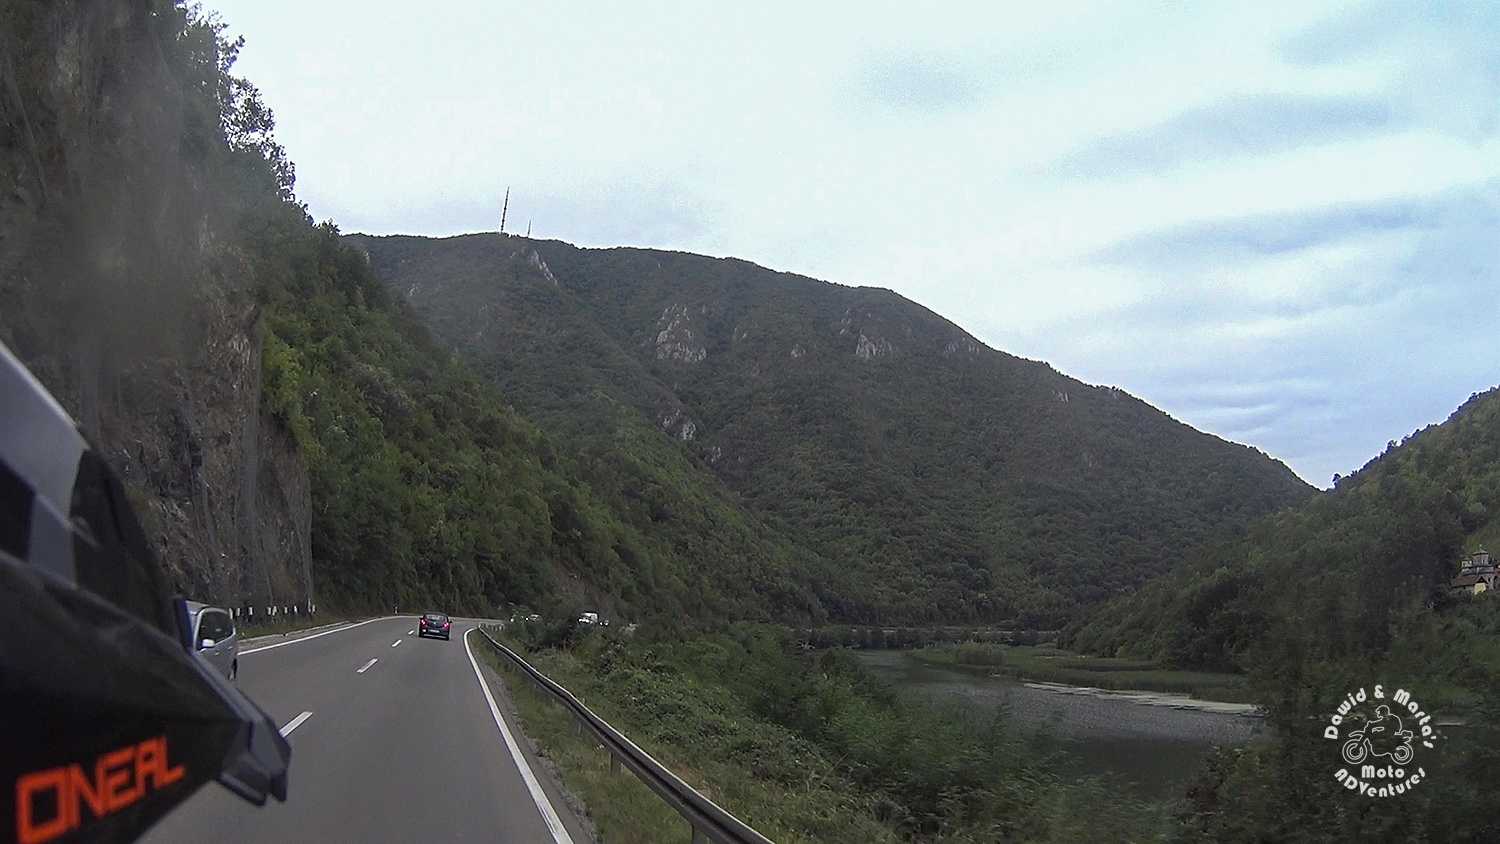 Riding motorcycle through Serbia south mountains